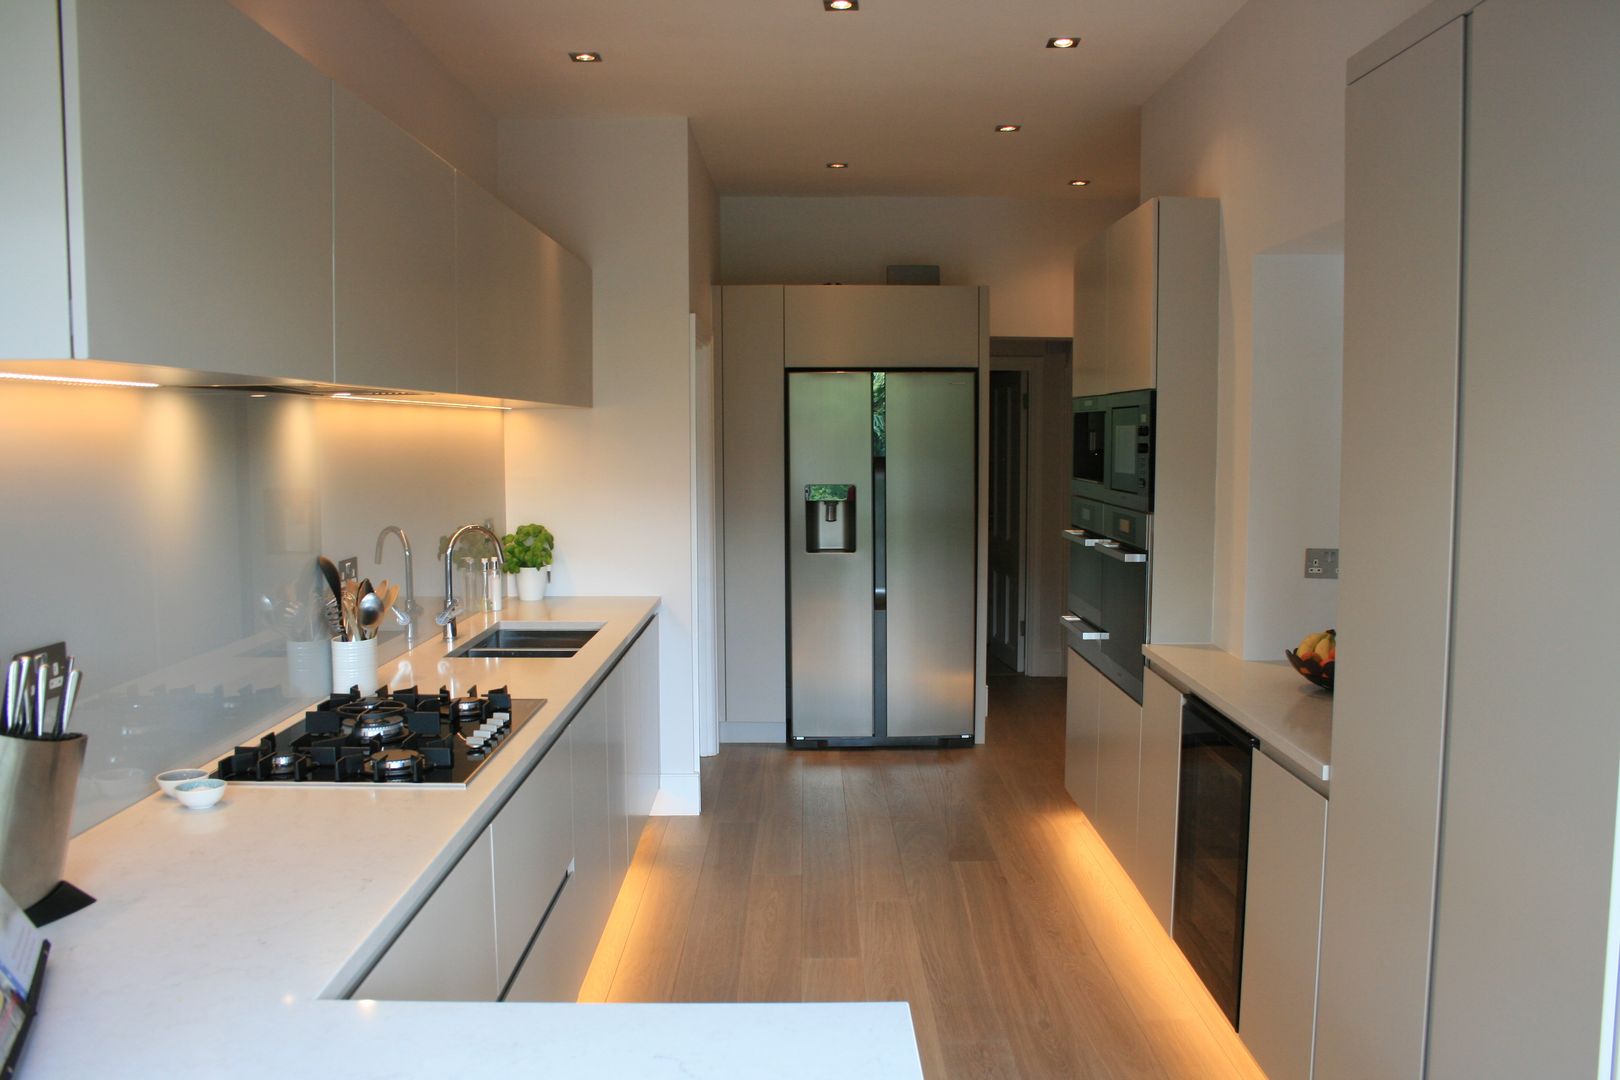 Barnes Kitchen , Place Design Kitchens and Interiors Place Design Kitchens and Interiors Cozinhas minimalistas